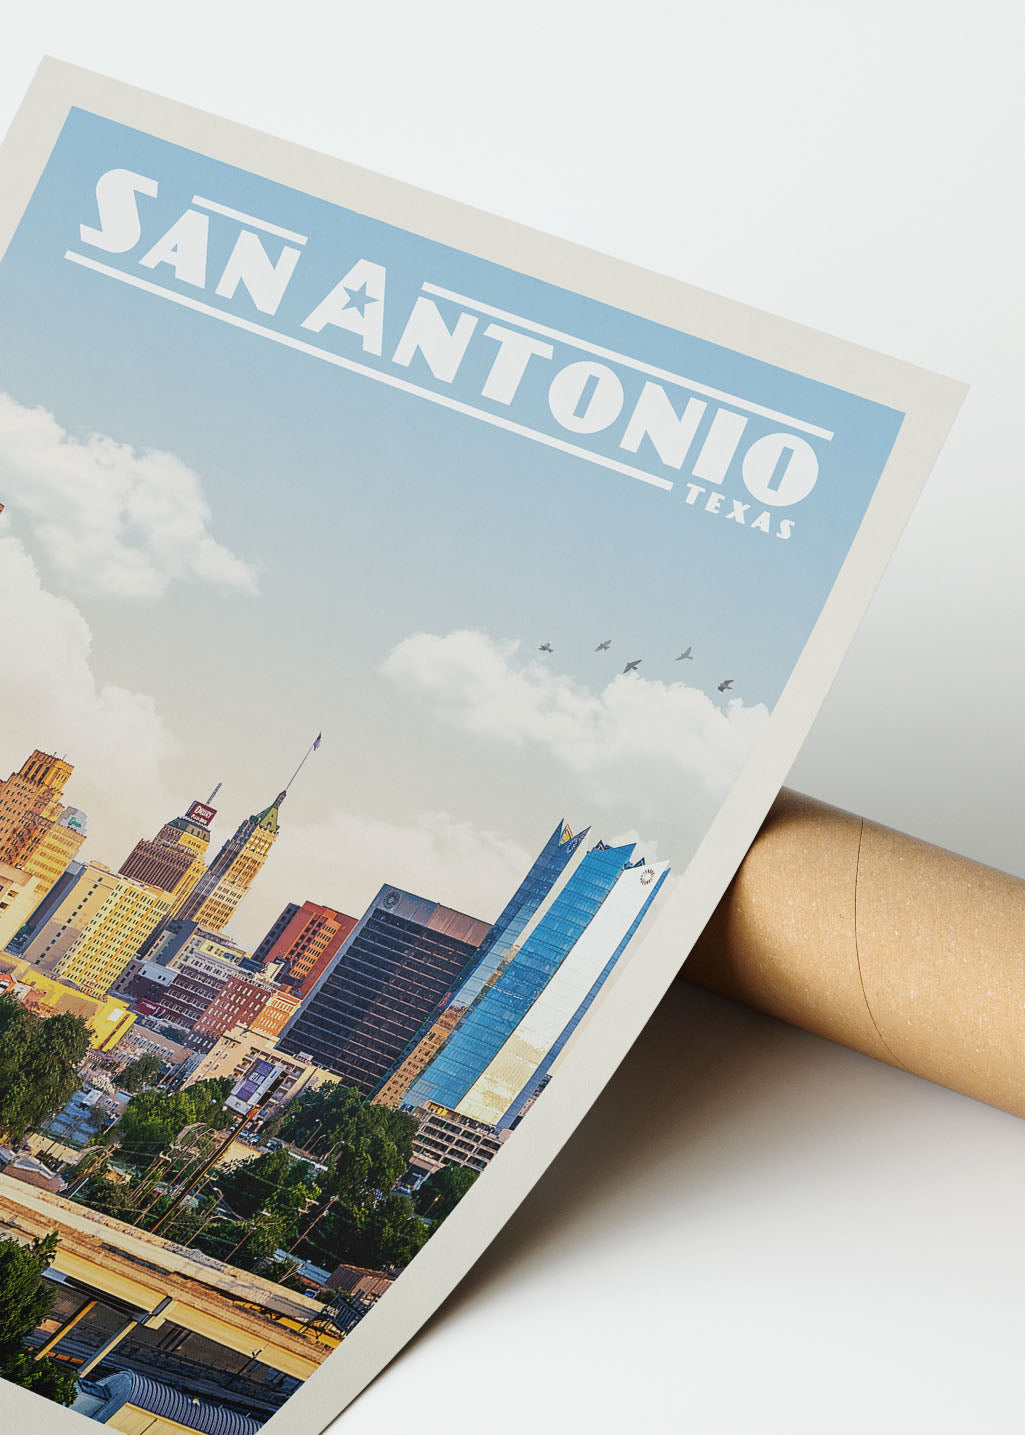 San Antonio, Texas - Vintage Travel Print - Vintaprints